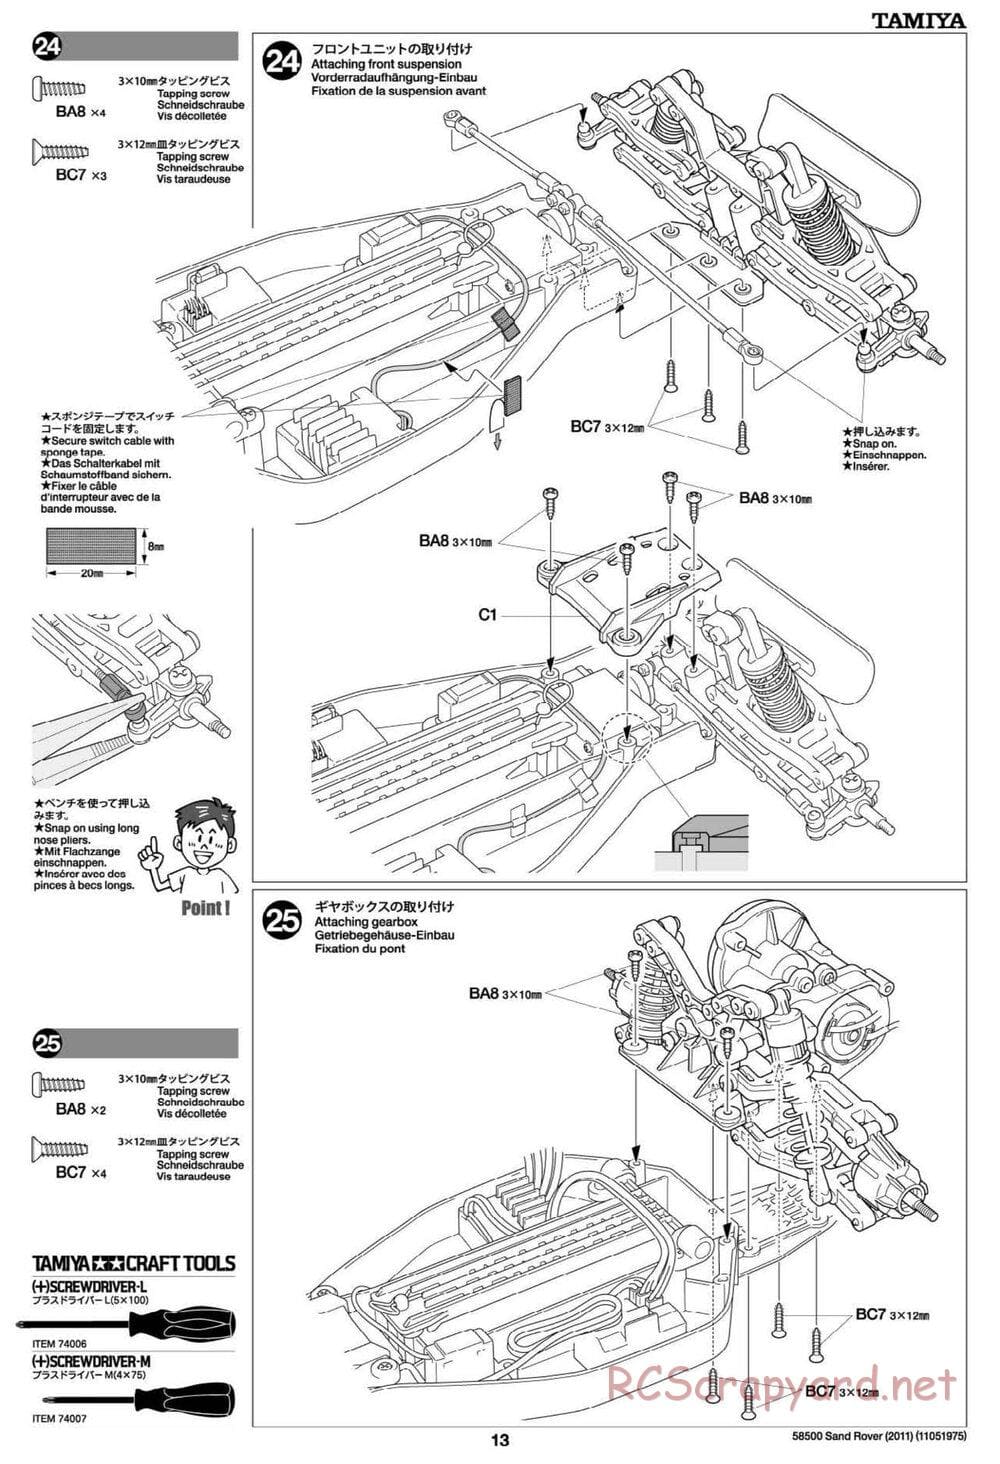 Tamiya - Sand Rover 2011 Chassis - Manual - Page 13